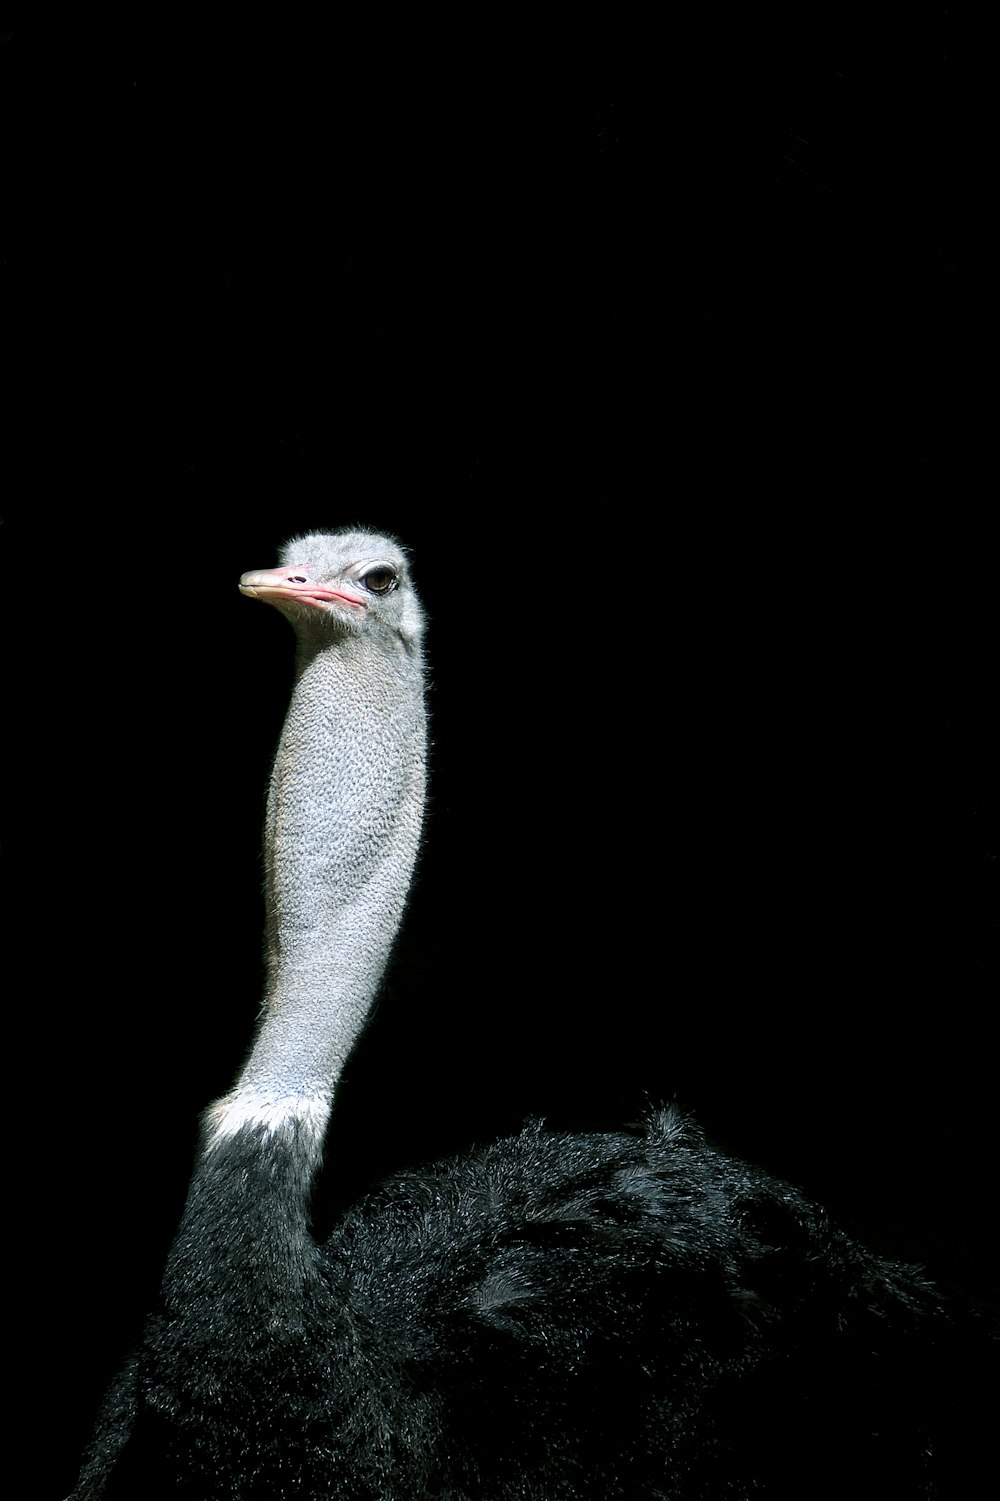 an ostrich is standing in the dark